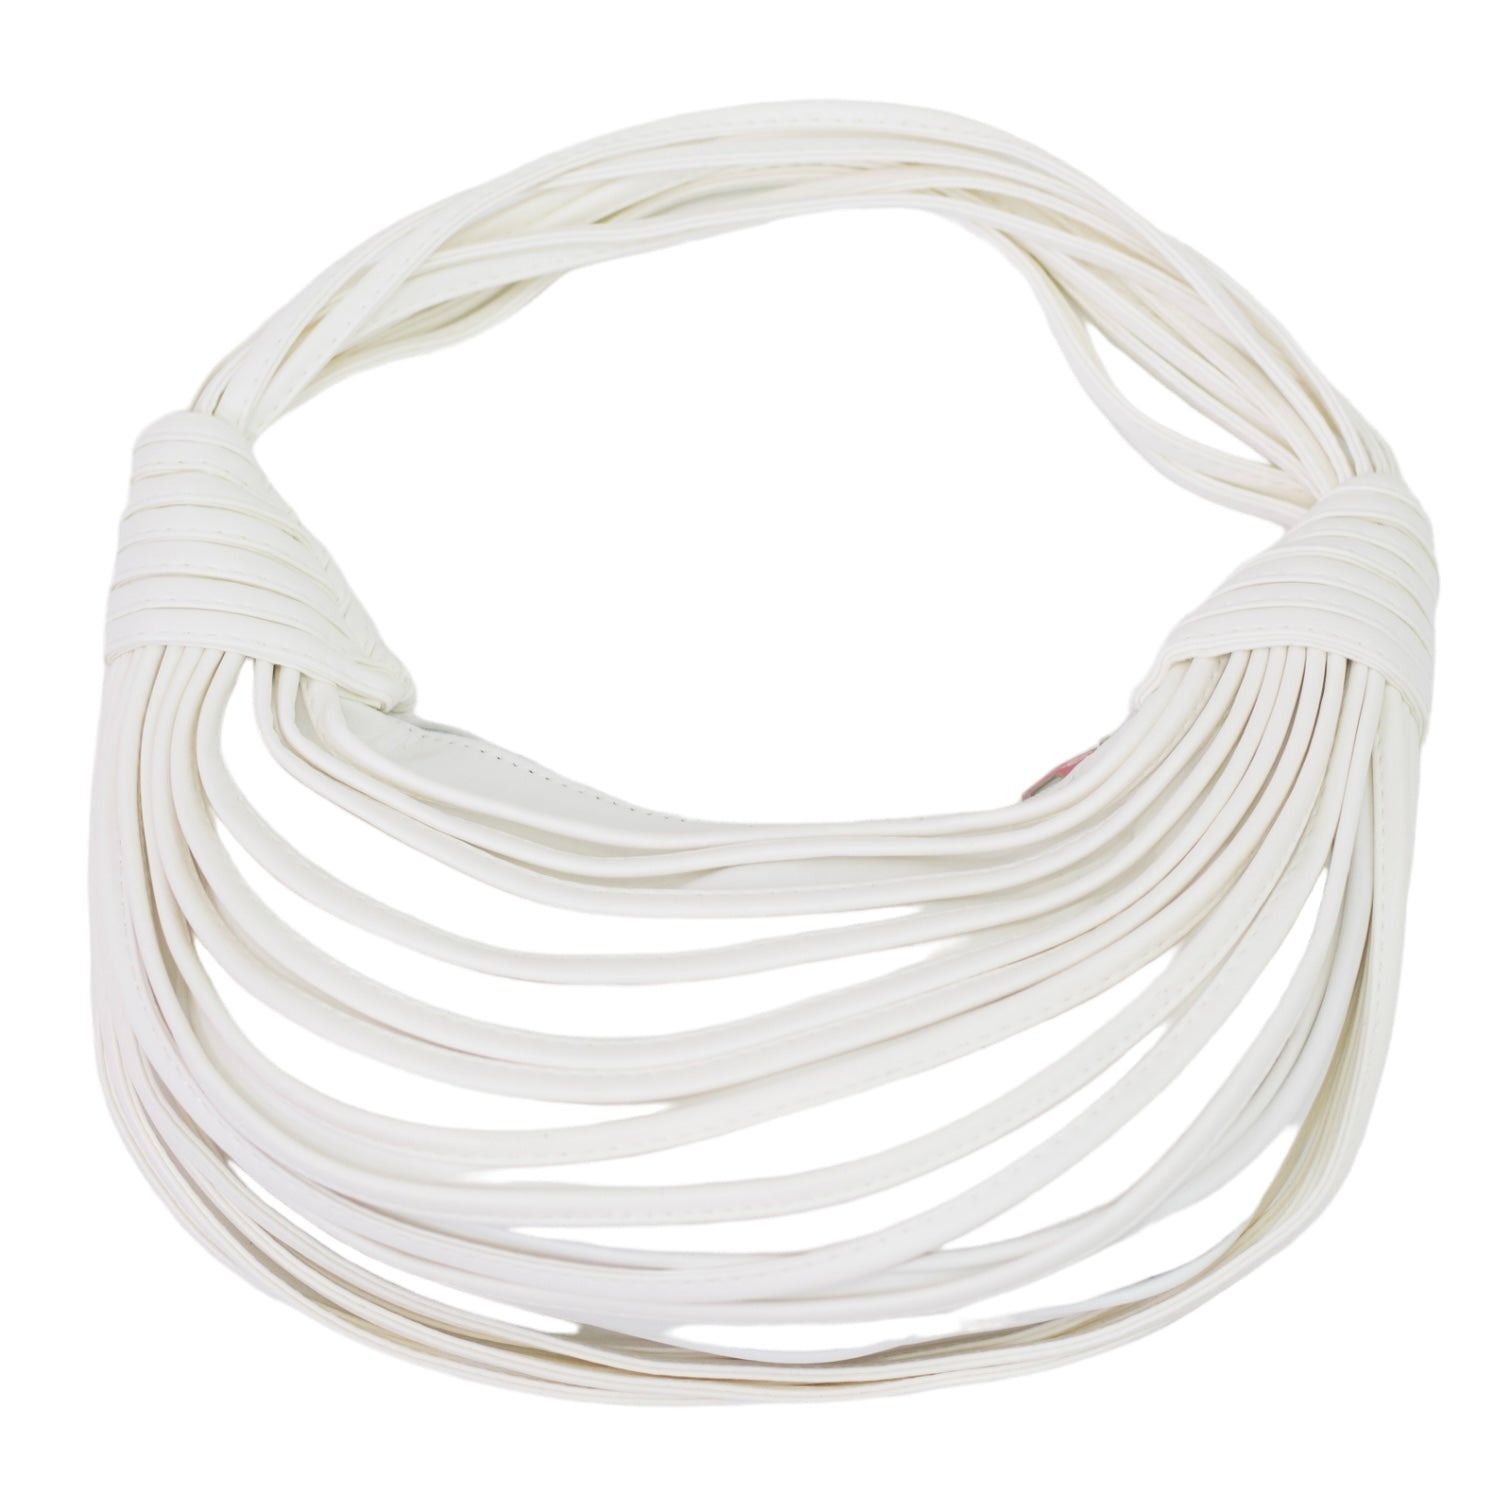 White strippy belts rigid shoulder bag shibz